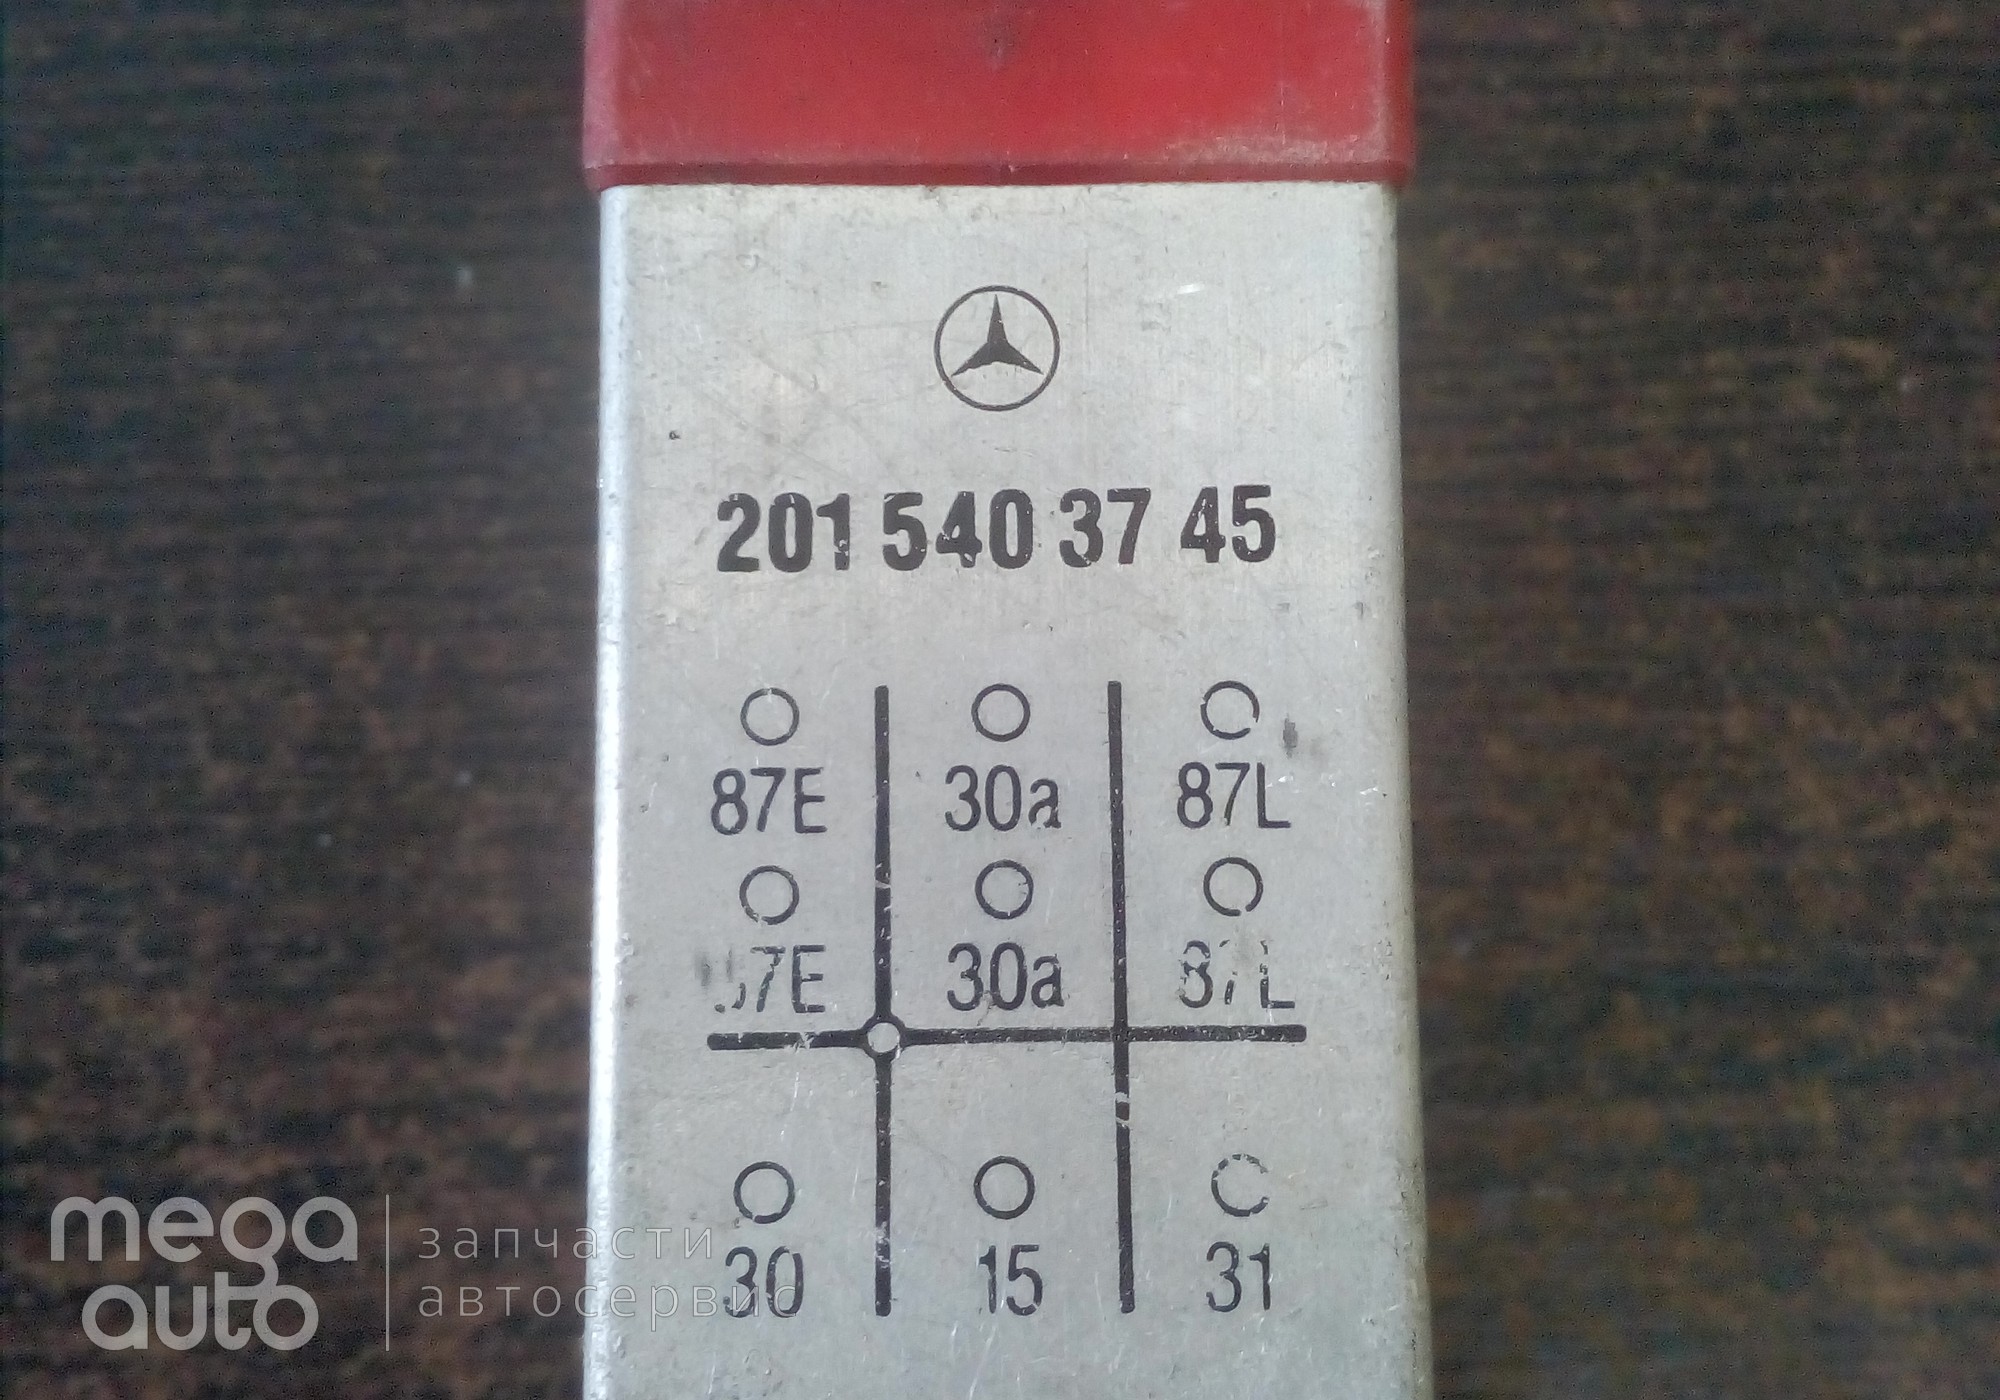 2015403745 Реле перегрузки мерседес для Mercedes-Benz G-class W463 II (с 1990 по 2018)